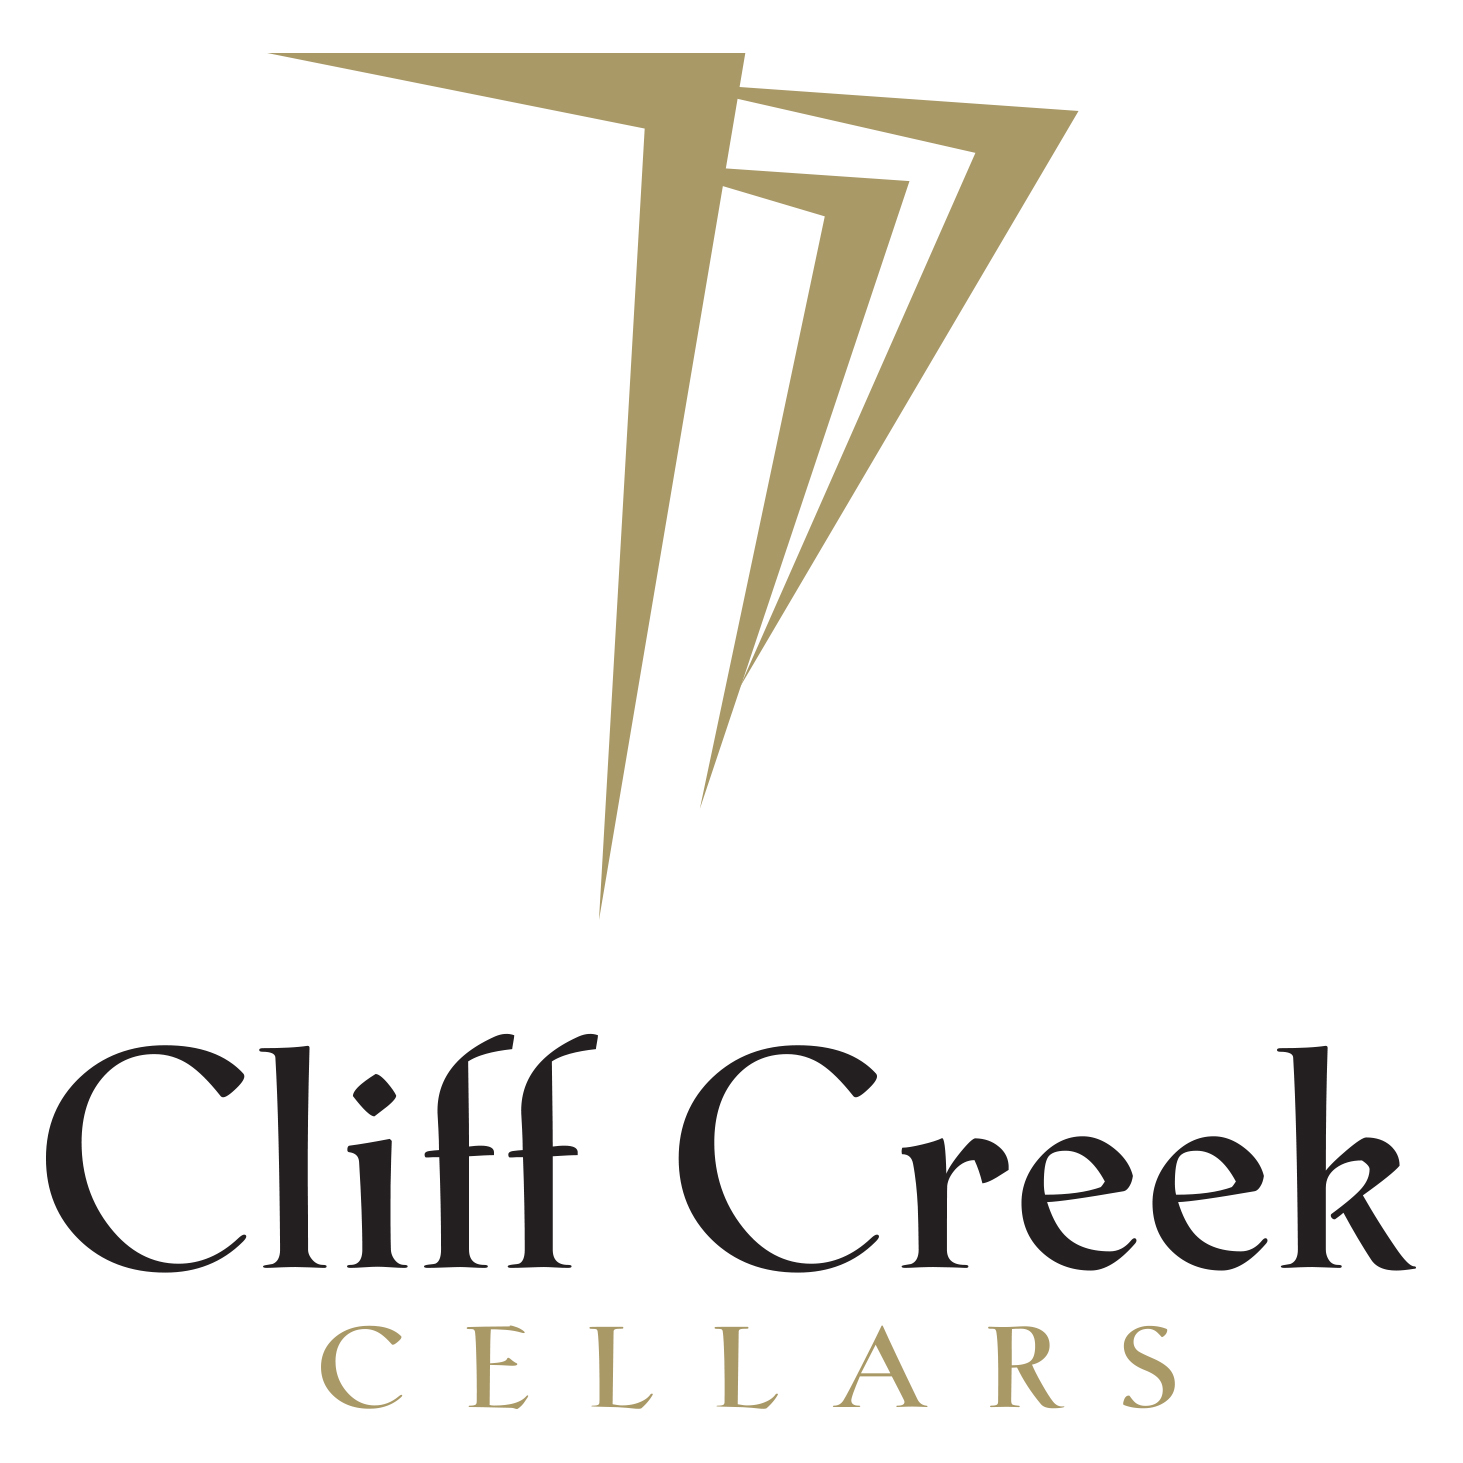 Cliff Creek Cellars at the Vineyard